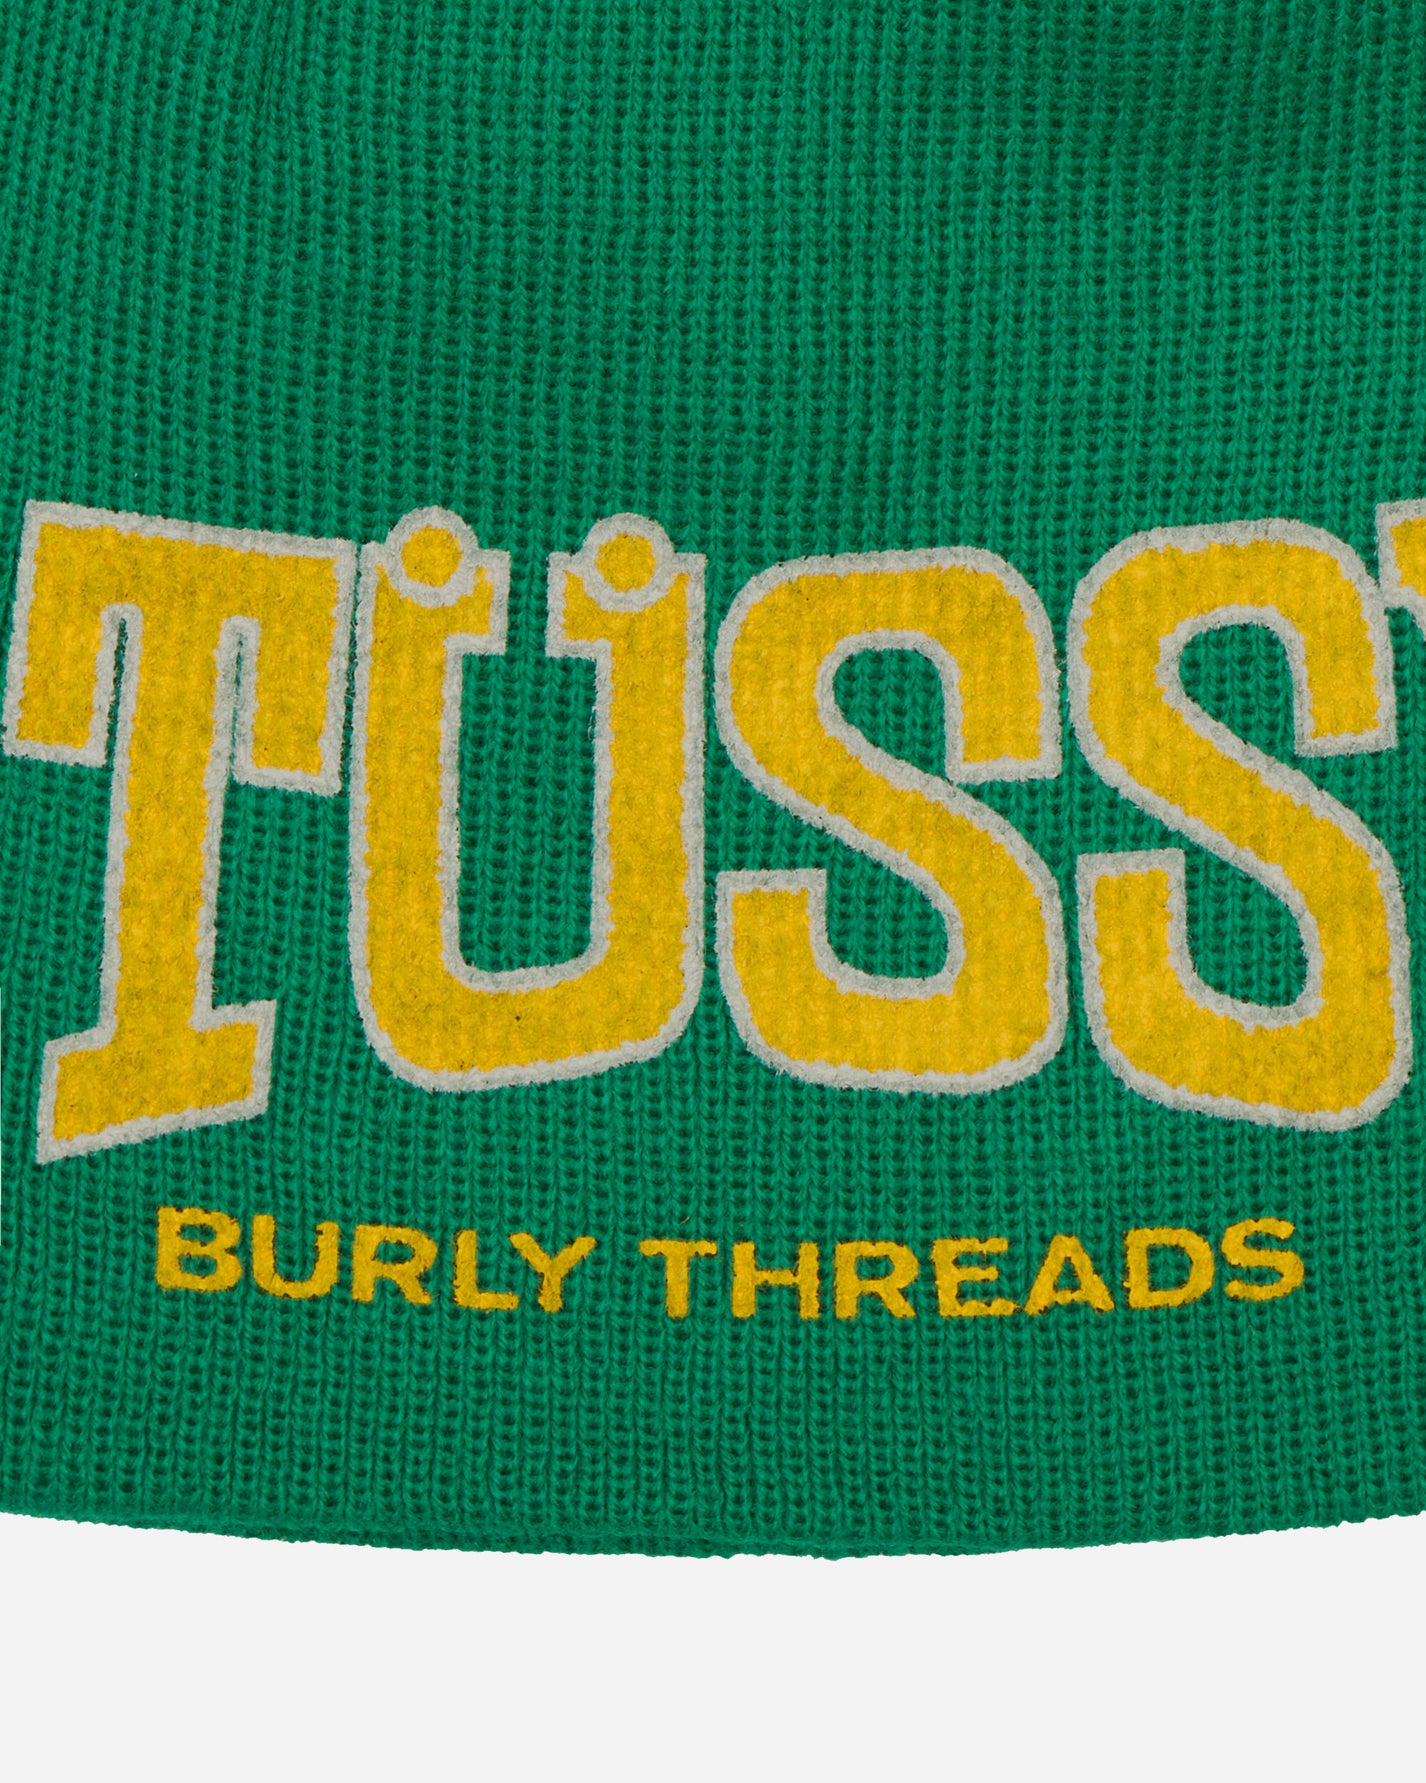 Stüssy Burly Threads Skullcap Beanie Green Hats Beanies 1321206 0401